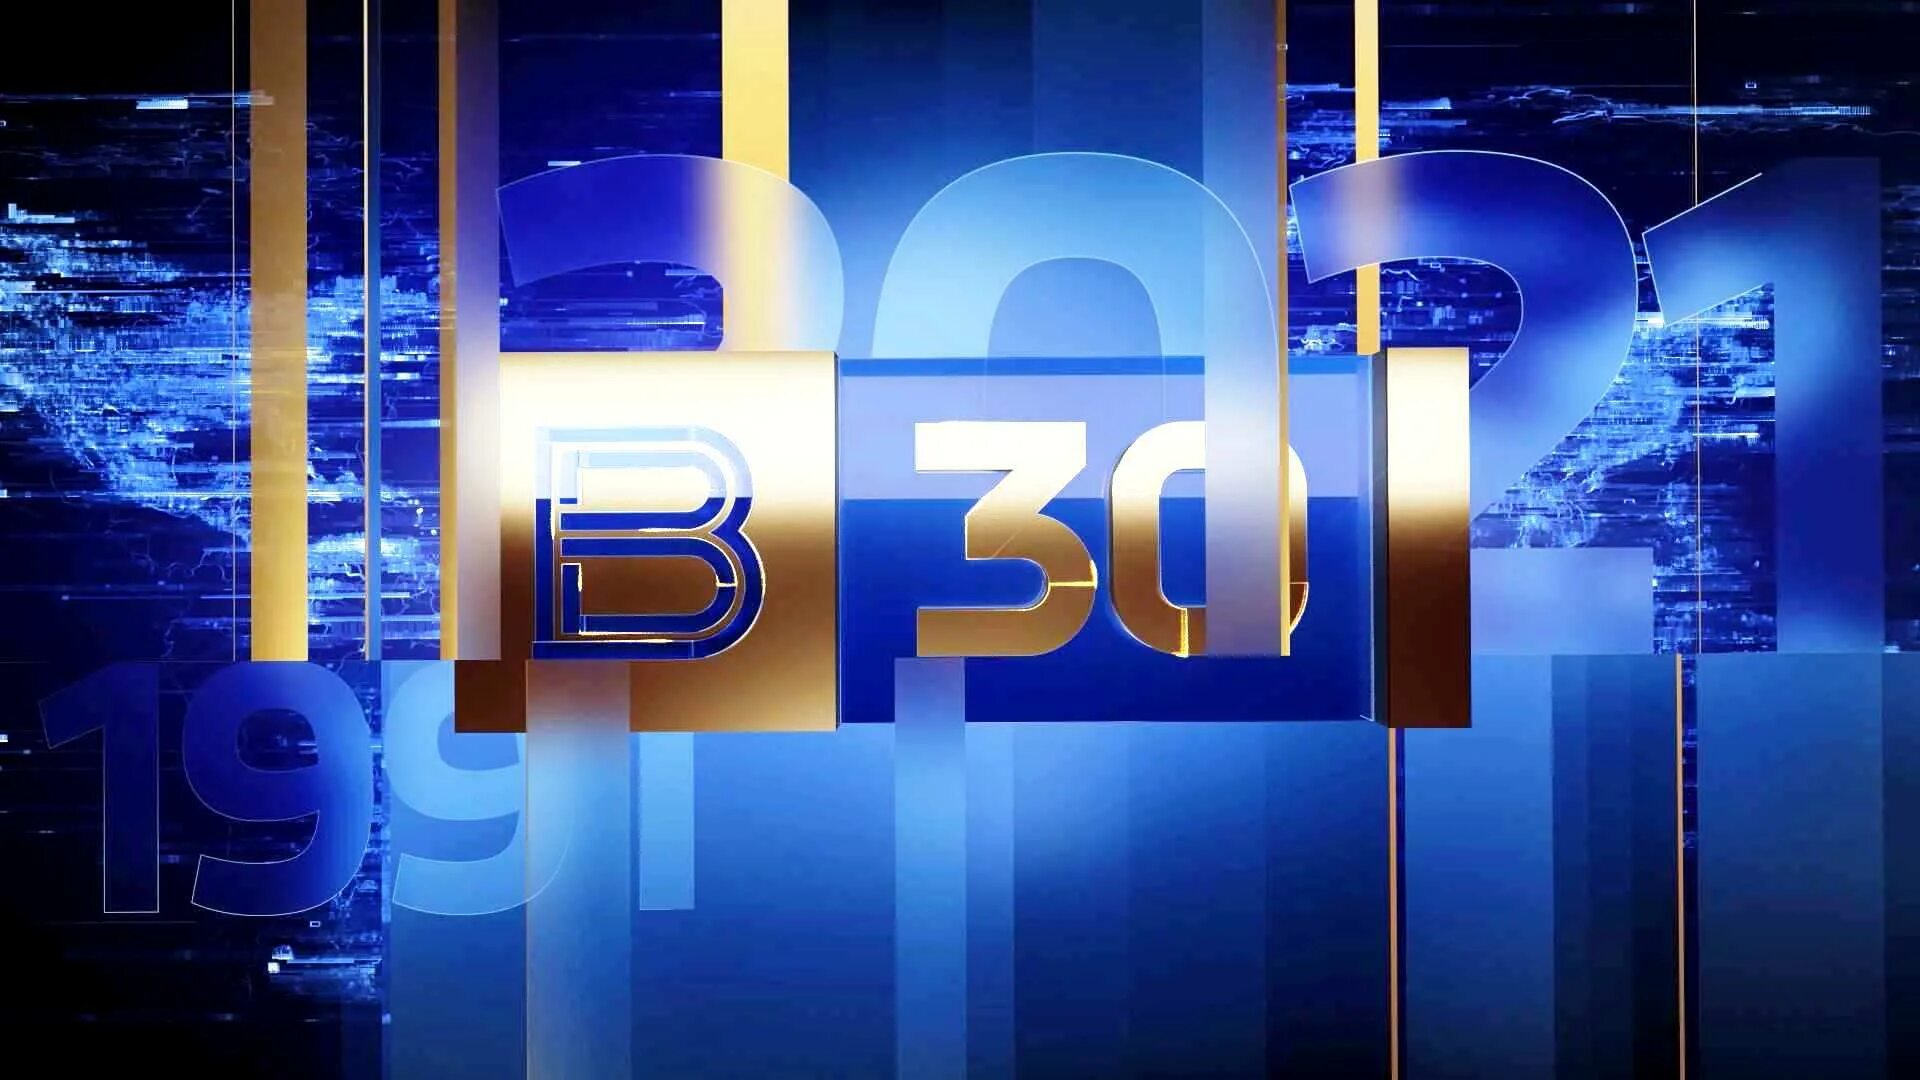 Вести. Вести логотип программы. Программа вести. Юбилей ВГТРК 30 лет. 30 декабря 2017 г